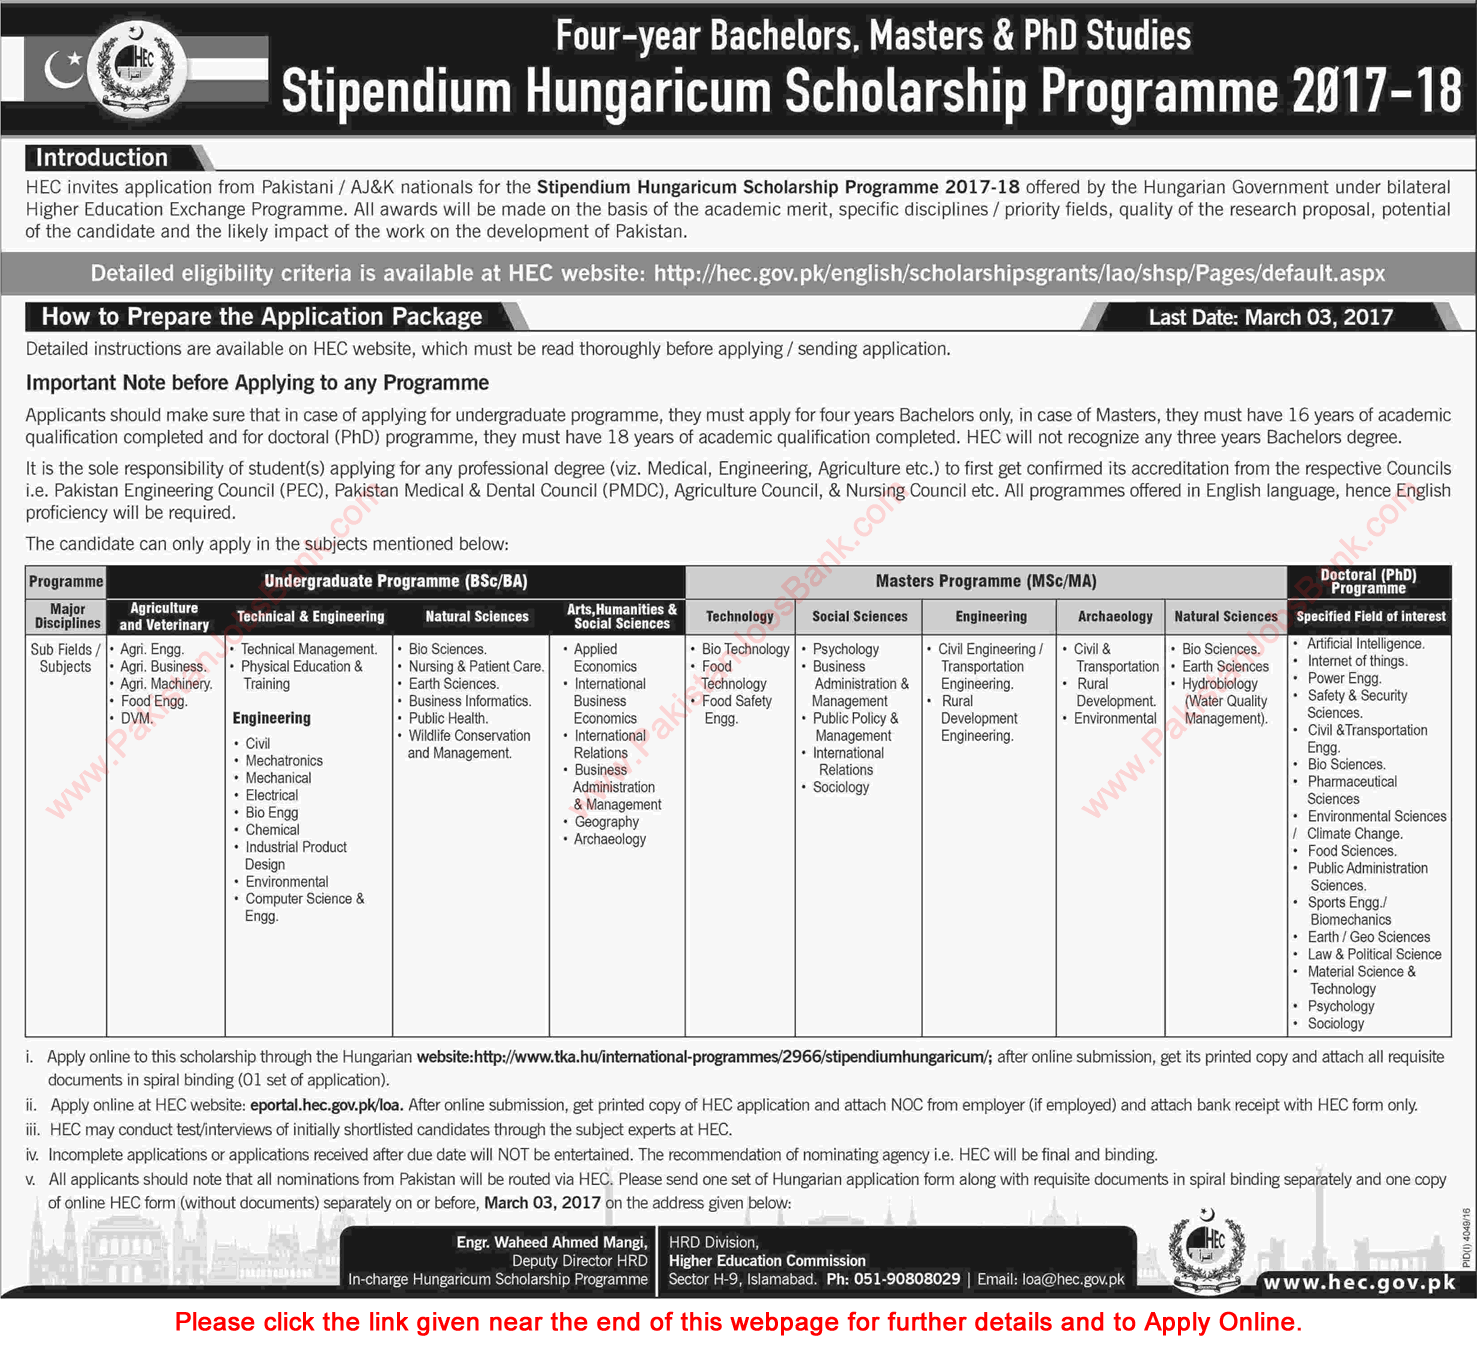 HEC Stipendium Hungaricum Scholarship Program 2017-18 Apply Online for 4 Years Bachelors, Masters & PhD Studies Latest